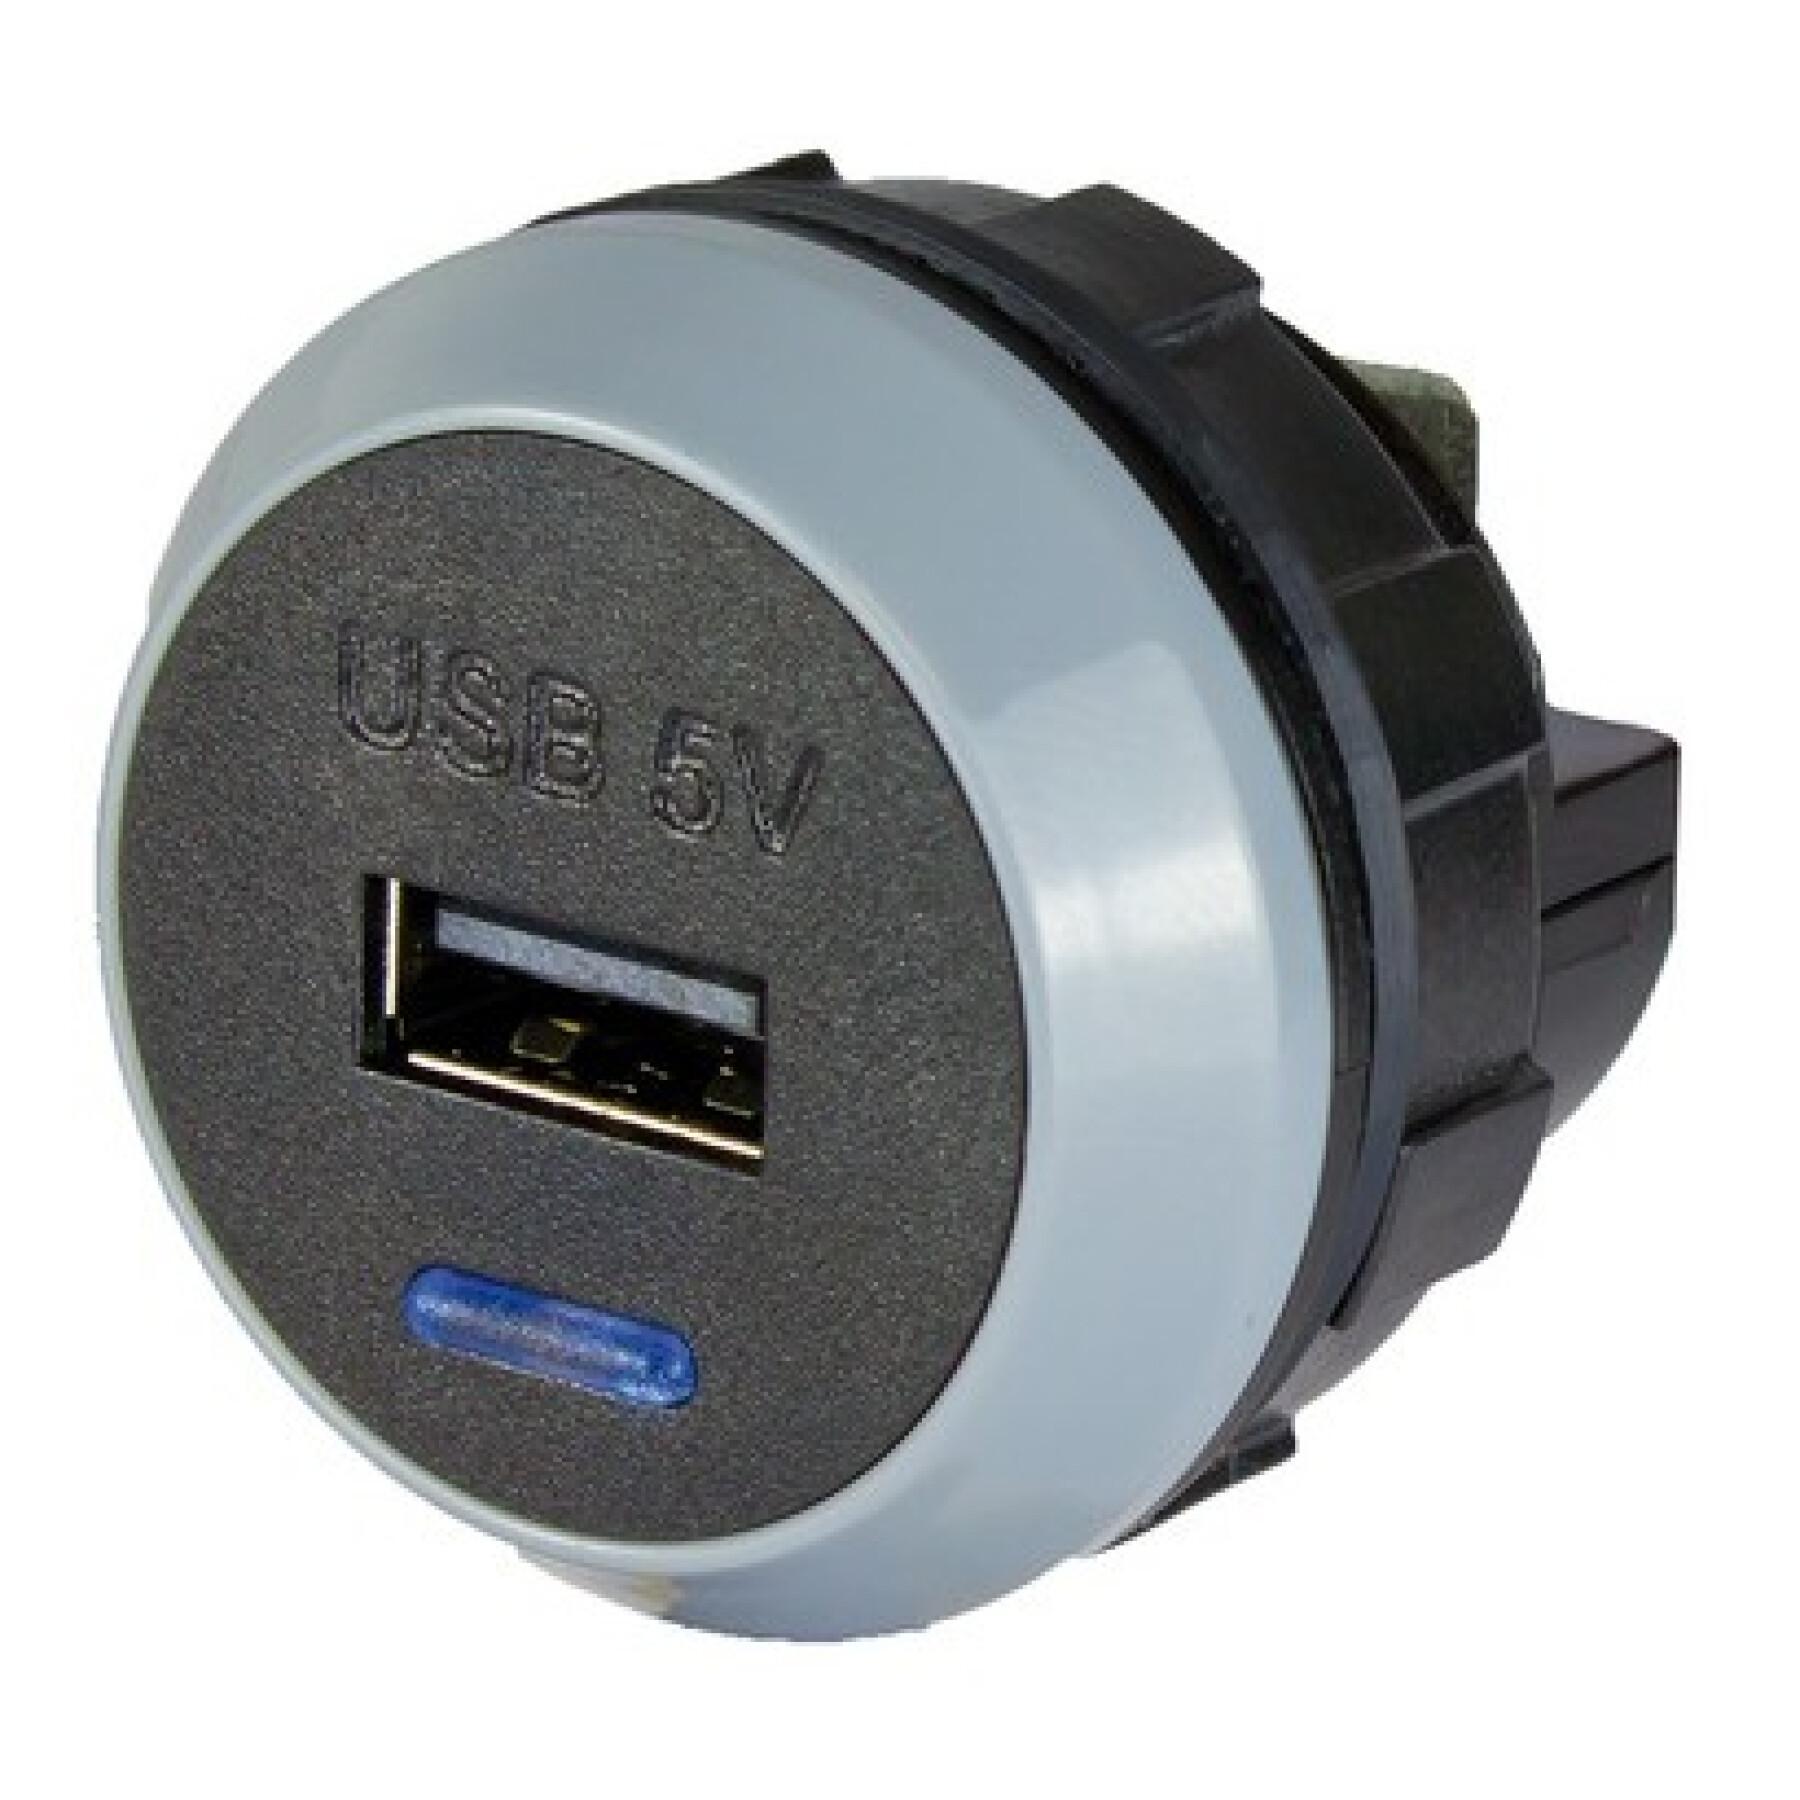 Chargeur USB simple sortie Alfatronix